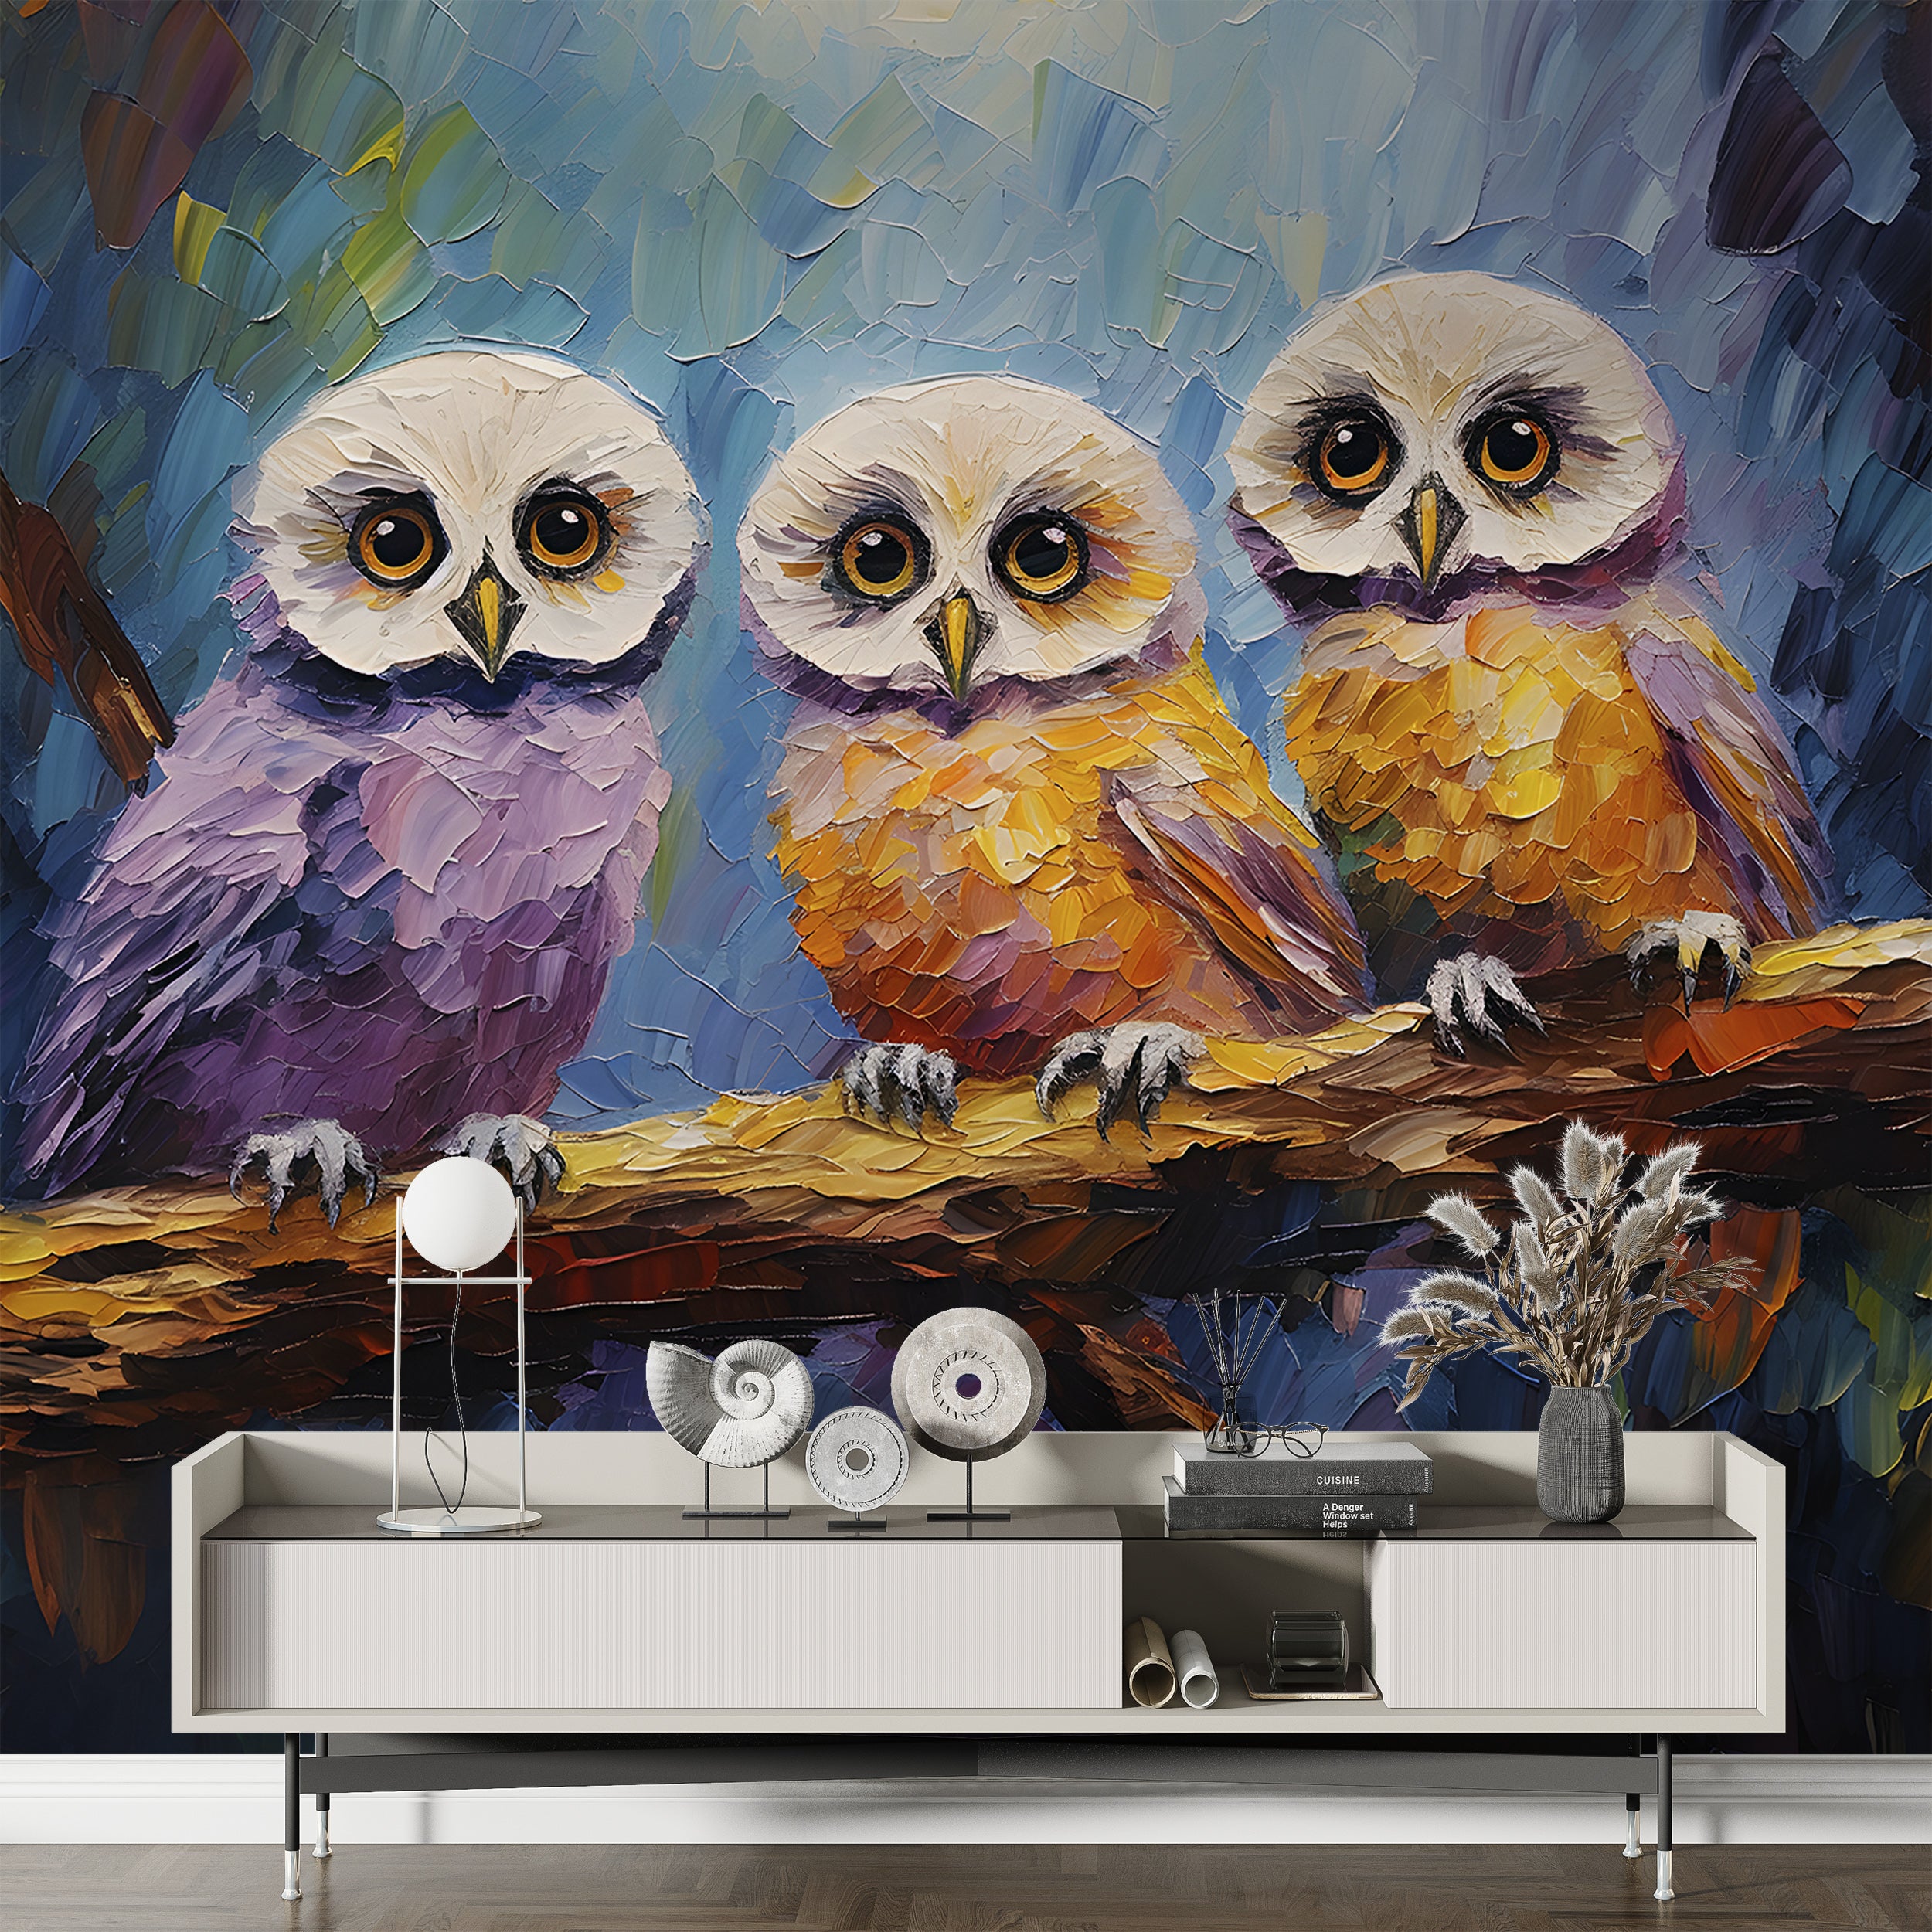 Van Gogh Style Owl Wall Decal